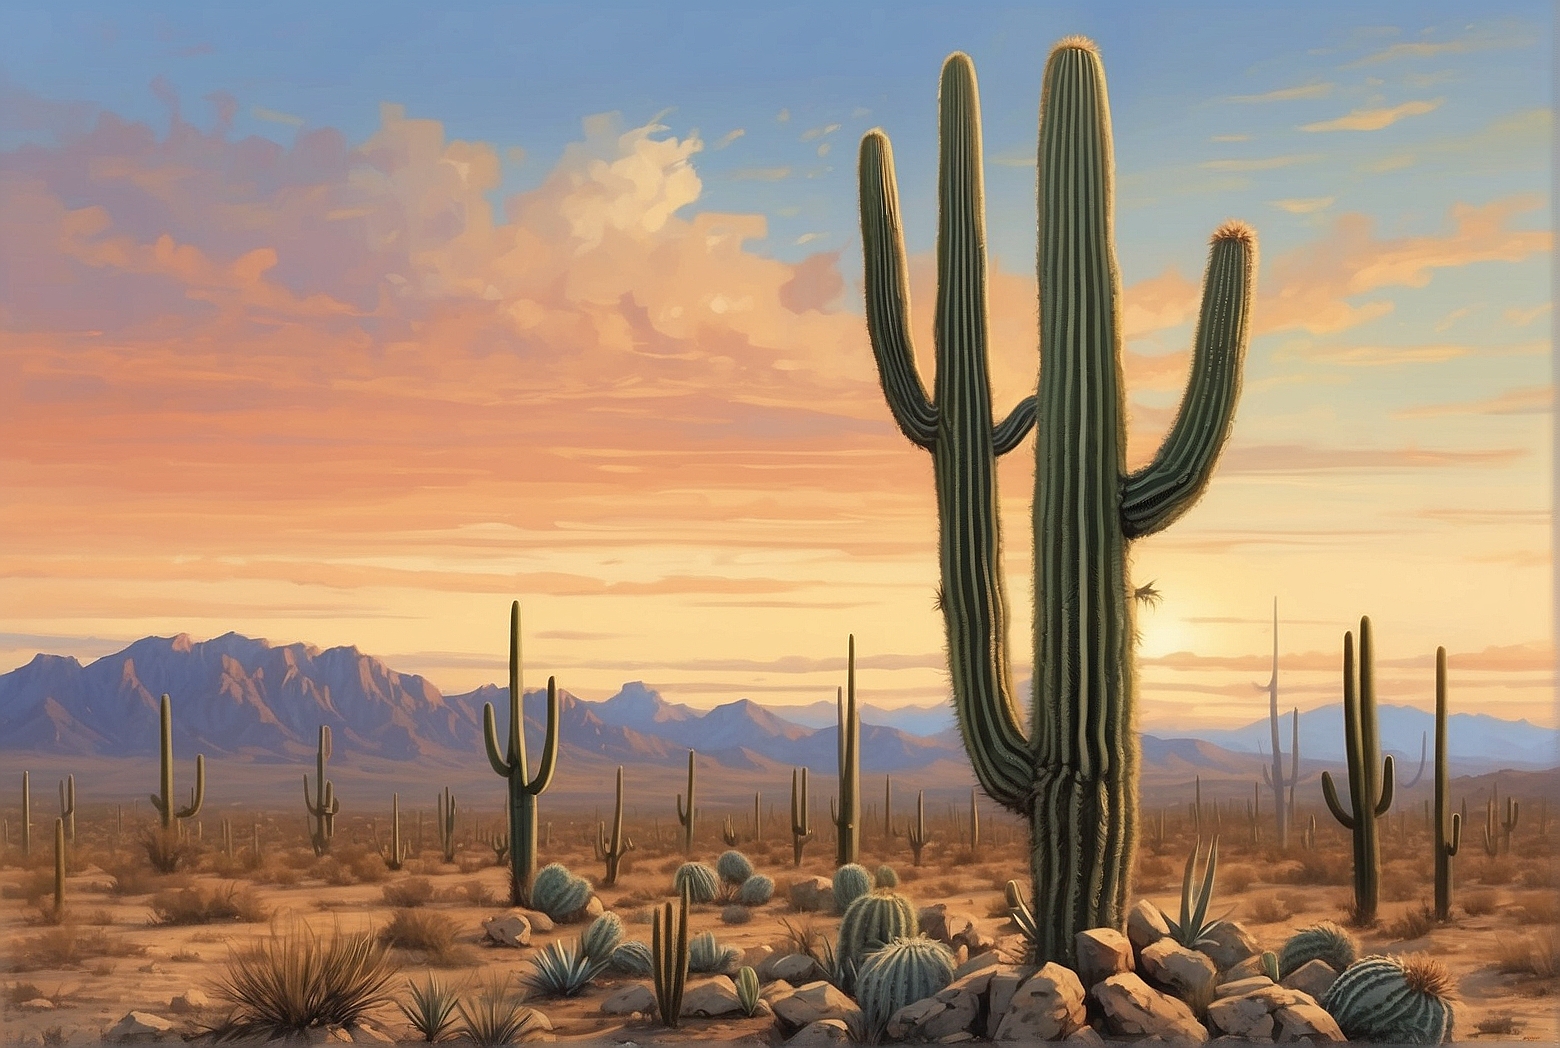 Adaptations of Saguaro Cactus in the Desert